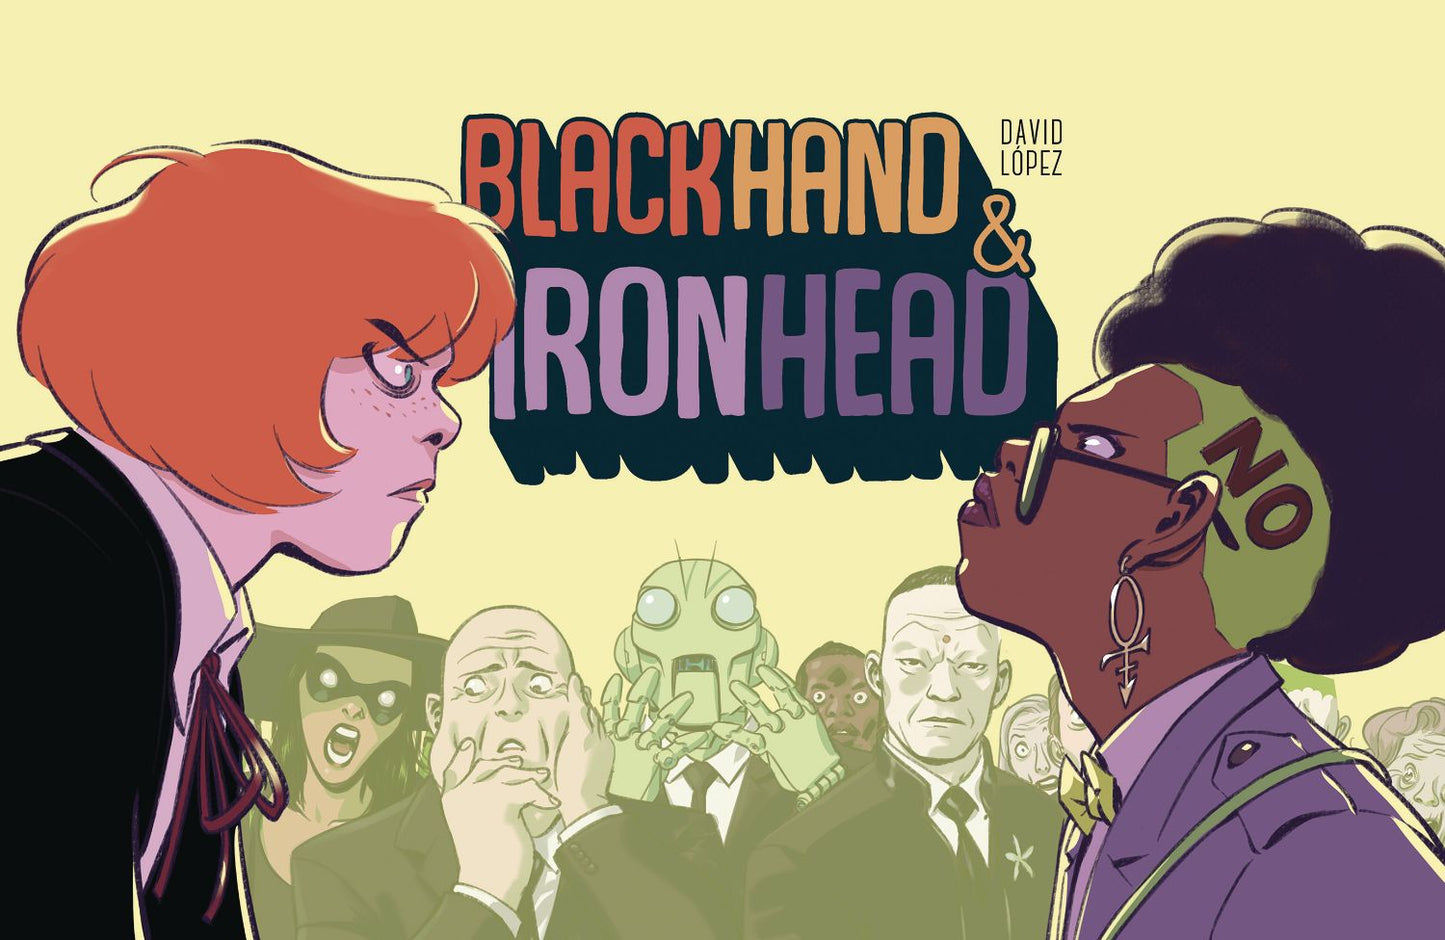 Blackhand & Ironhead Volume 1 (Hardcover)